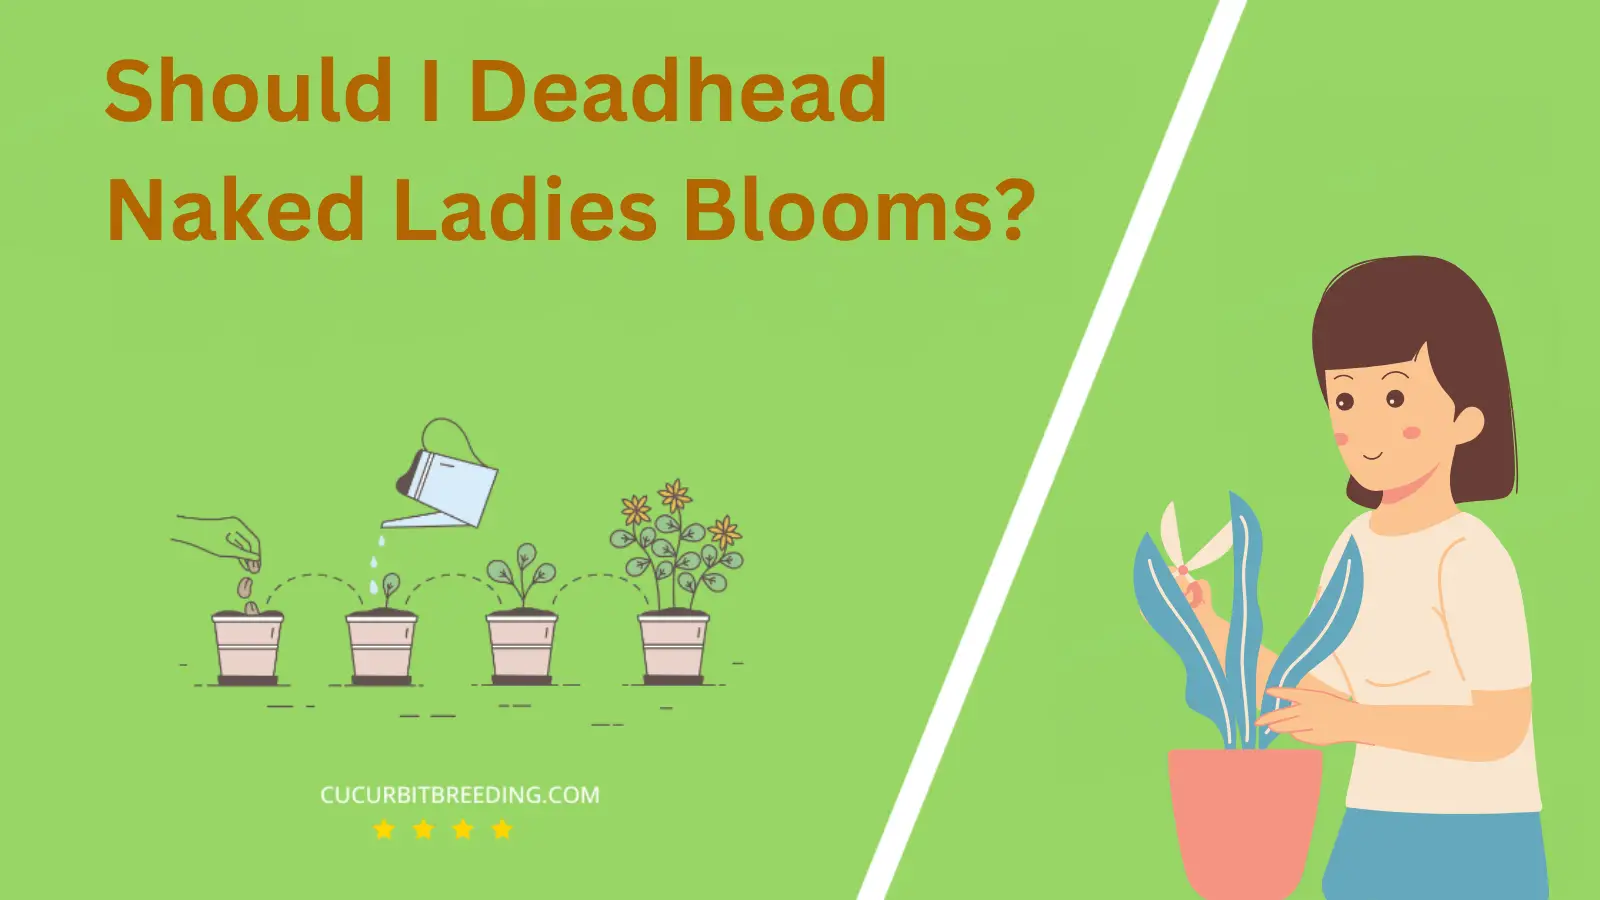 Should I Deadhead Naked Ladies Blooms?